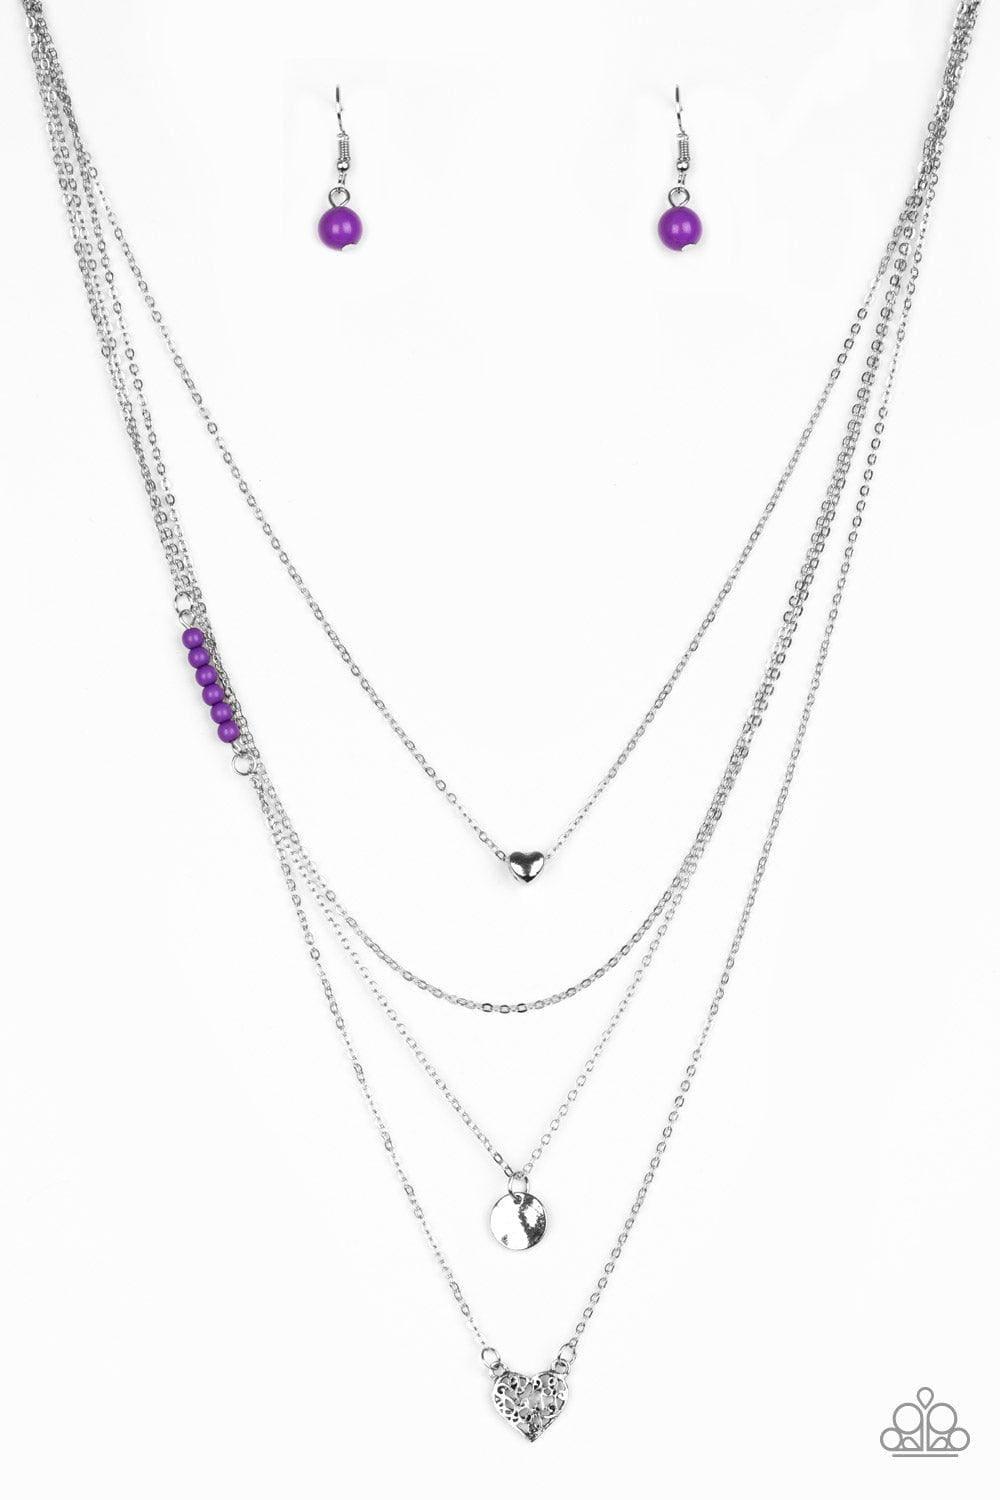 Paparazzi Accessories - Gypsy Heart - Purple Necklace - Bling by JessieK